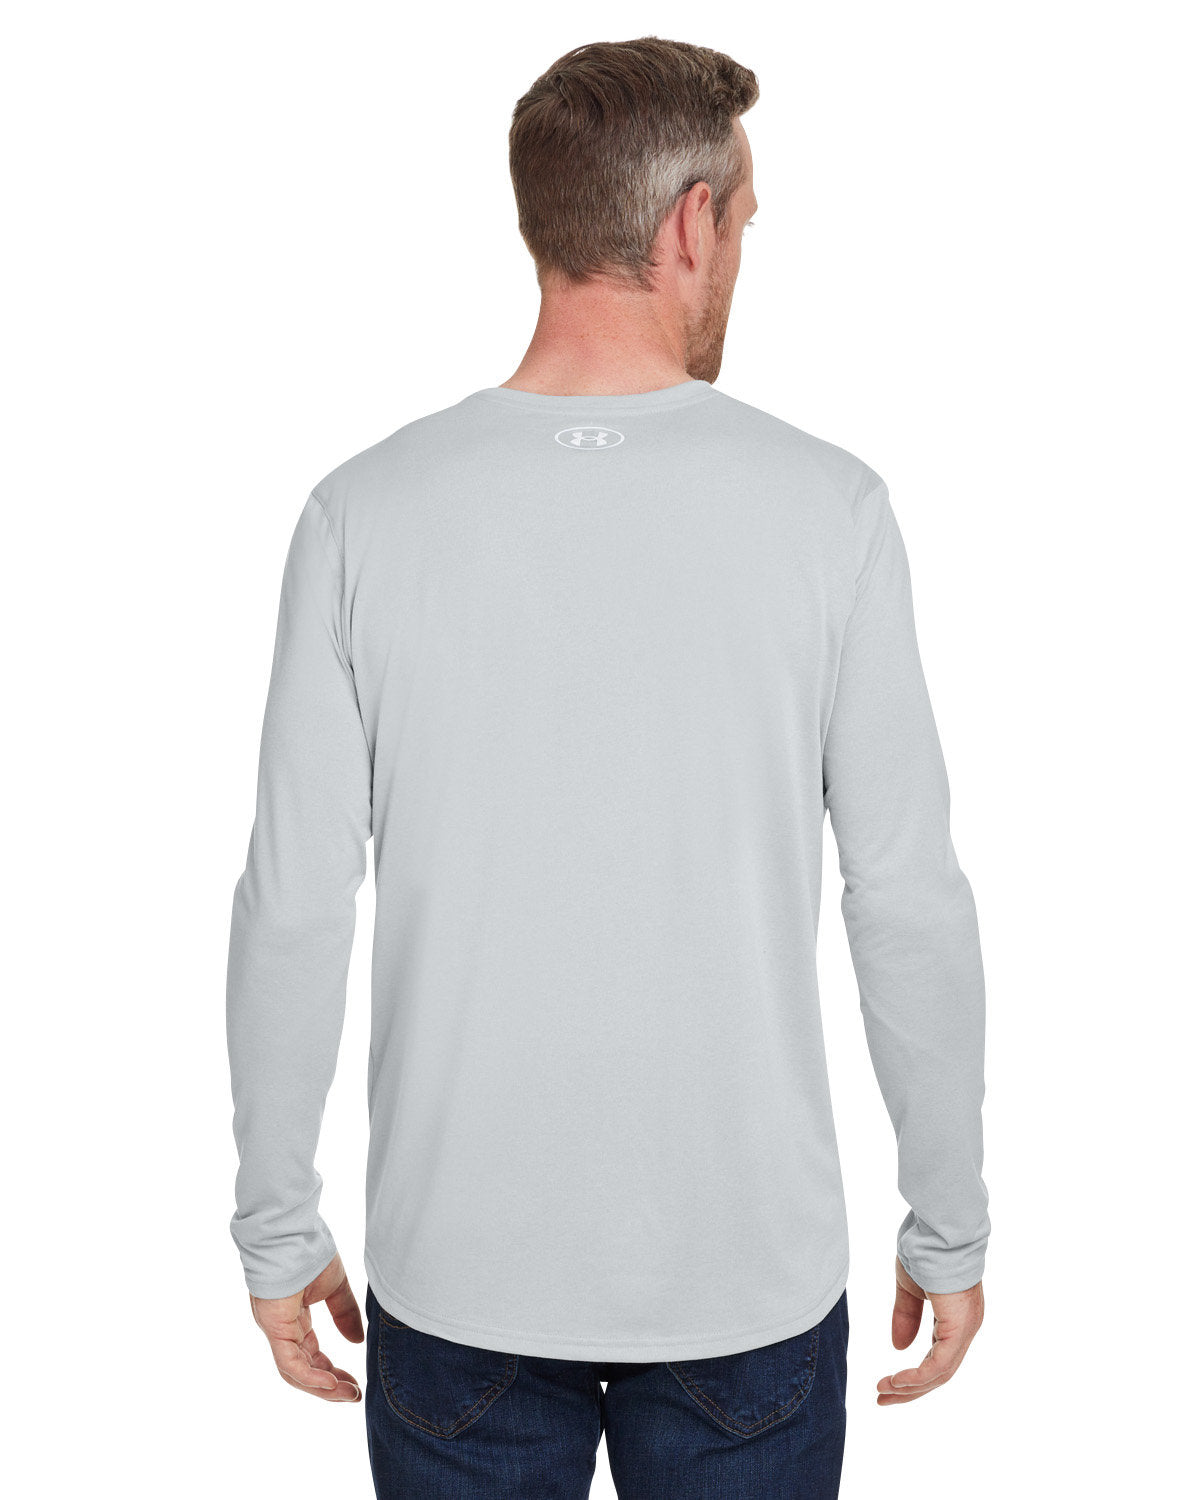 Under Armour Men's Tech Long-Sleeve Branded T-Shirts, Mod Grey